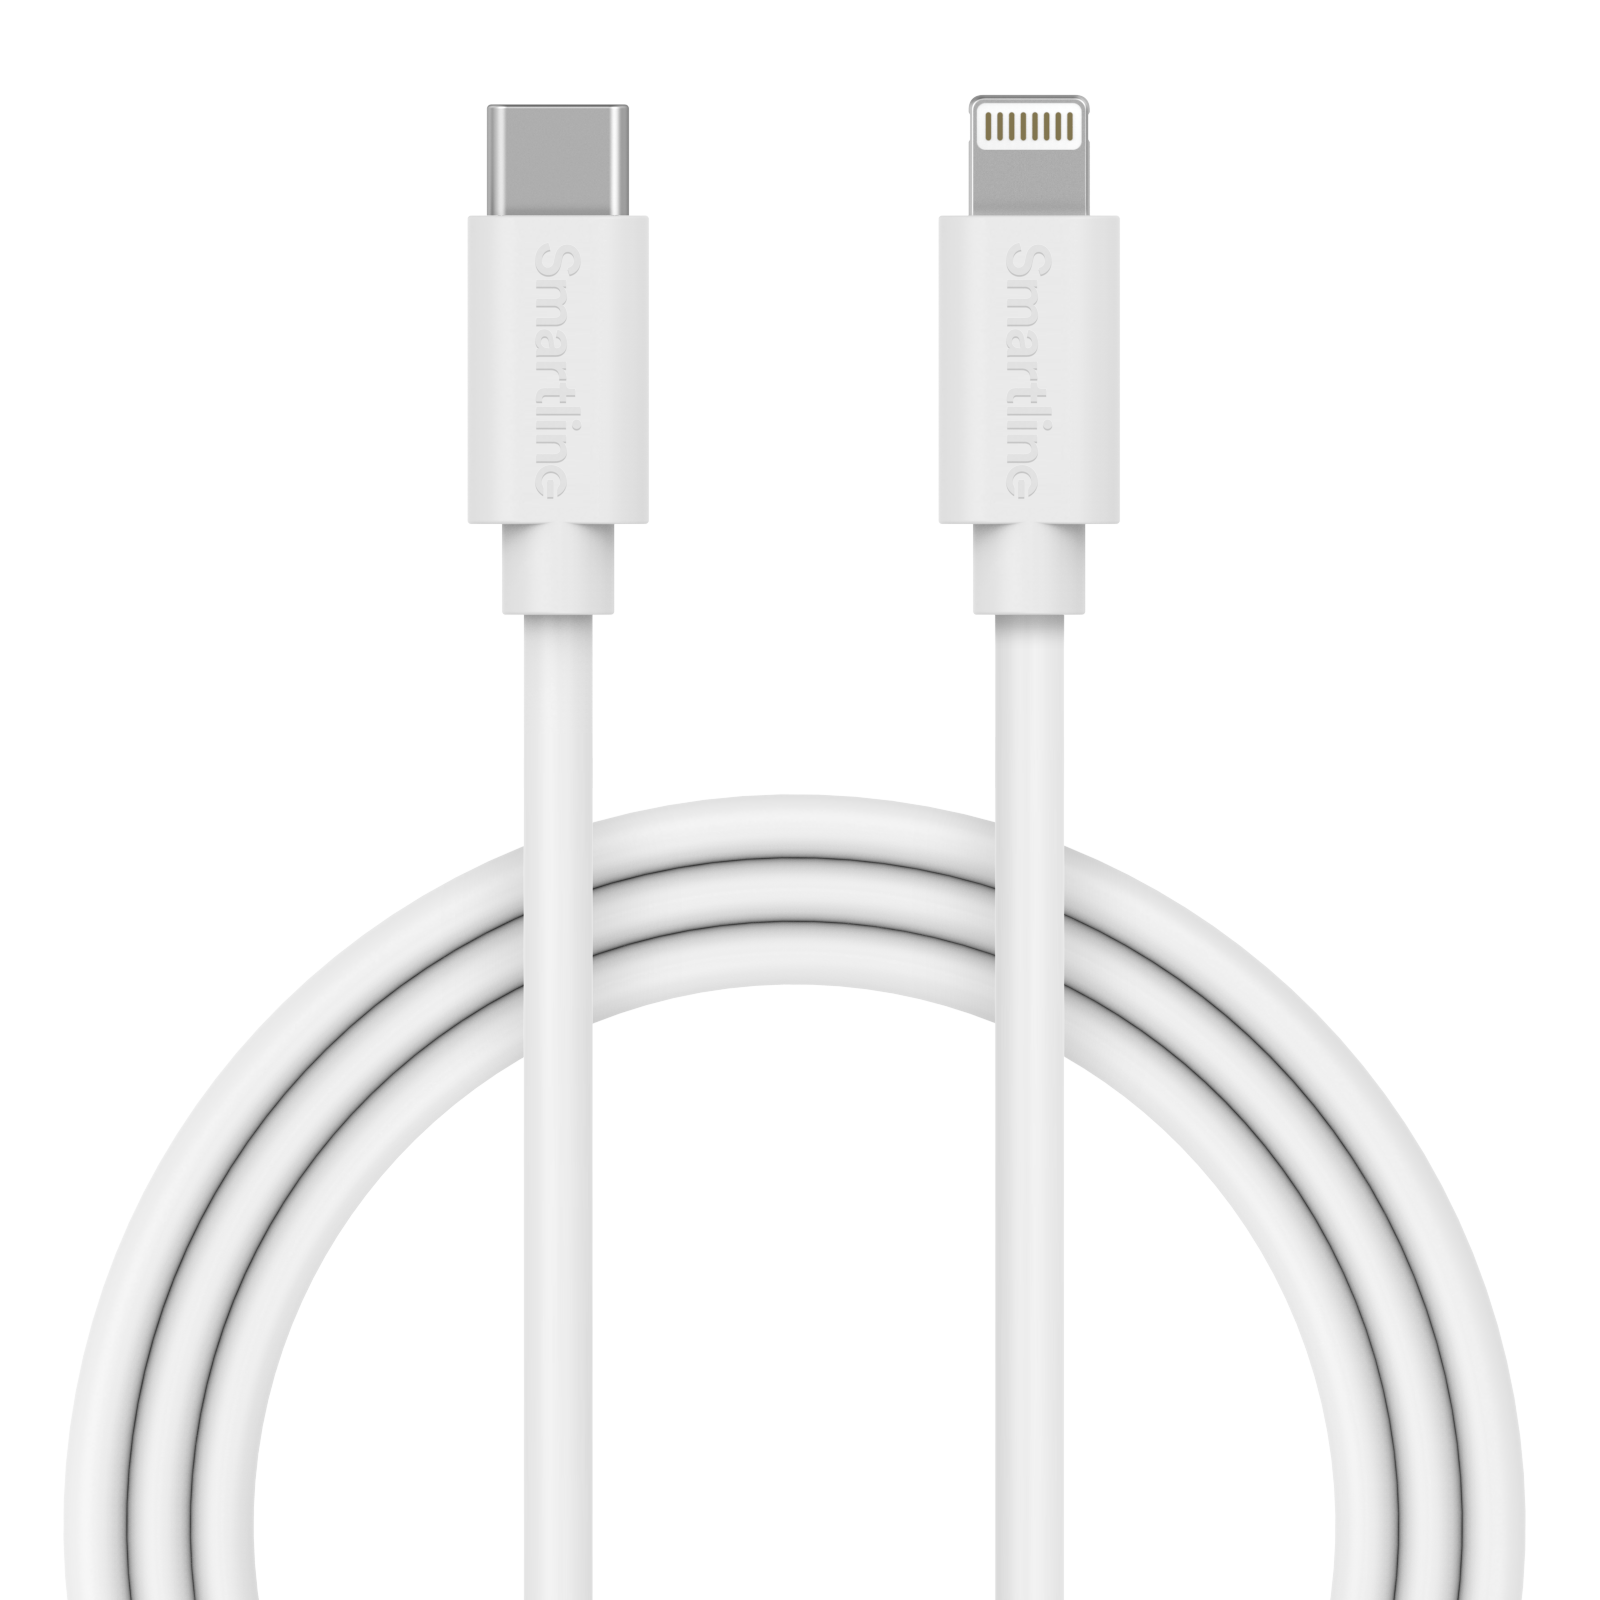 iPhone 11 Pro Kit för optimal laddning med 2m kabel, vit